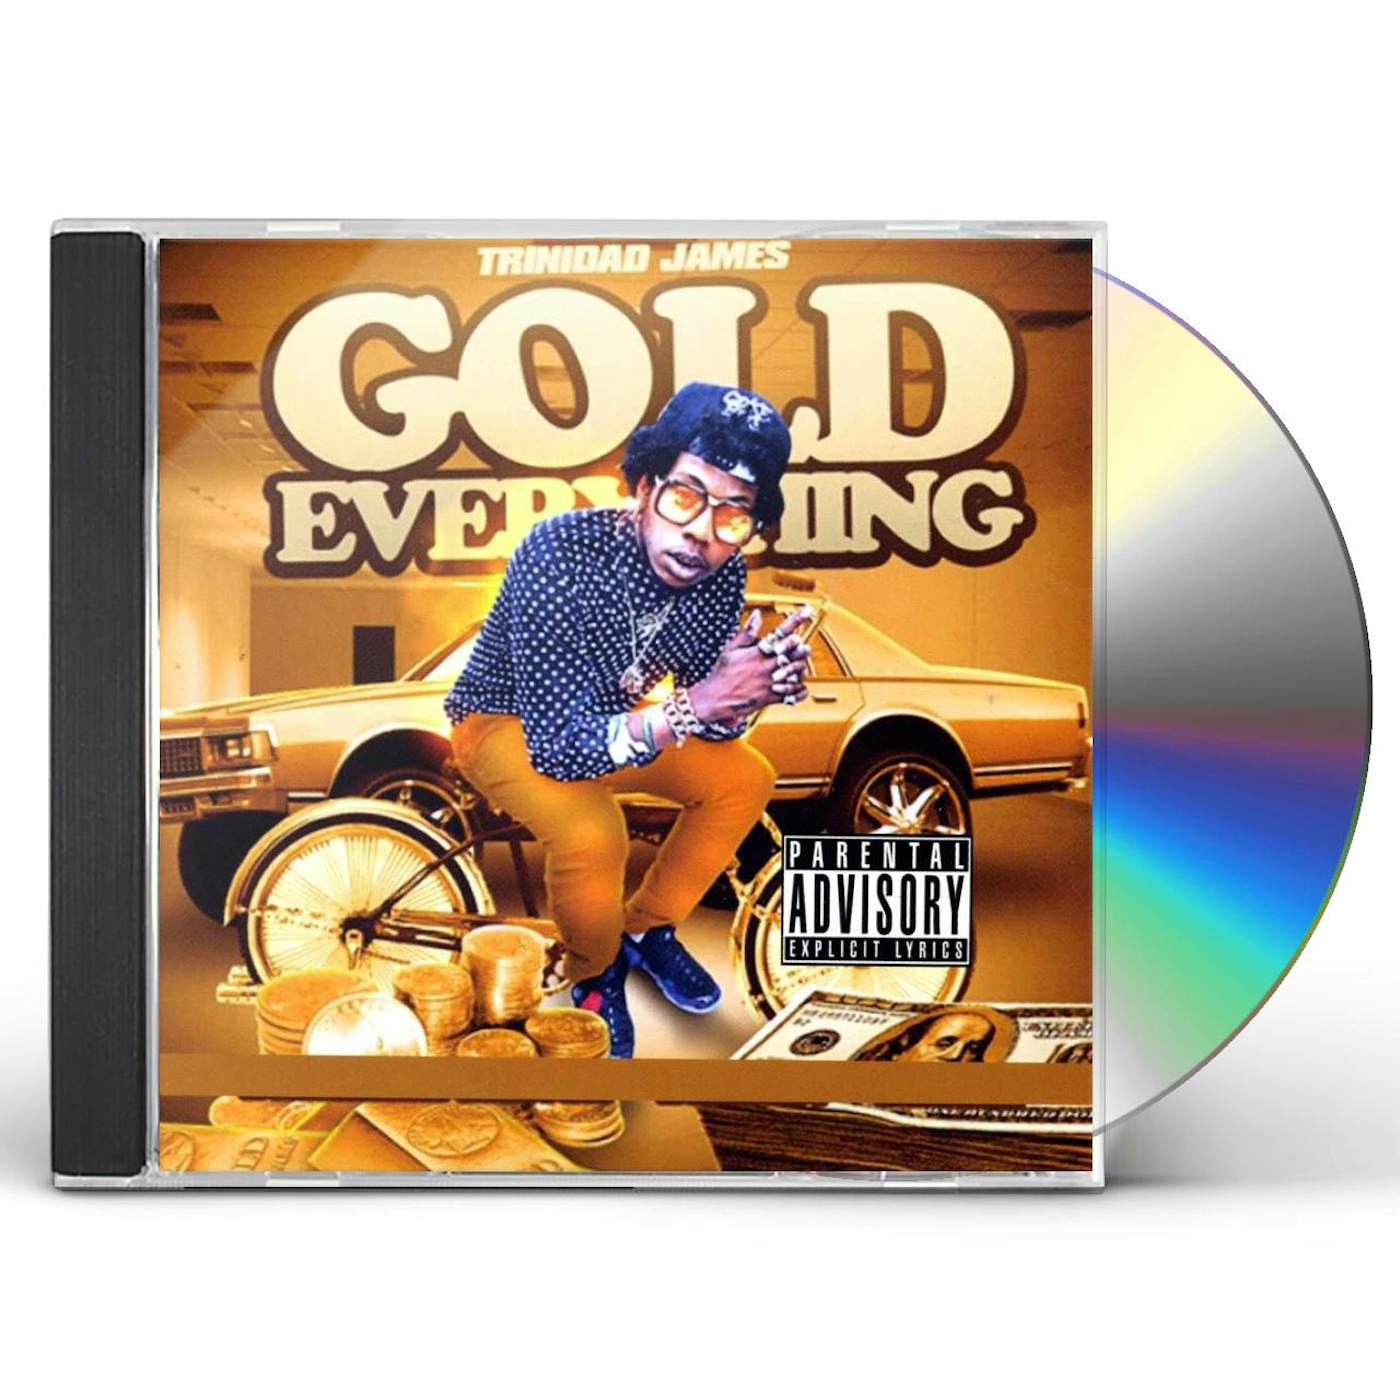 Trinidad James GOLD EVERYTHING CD